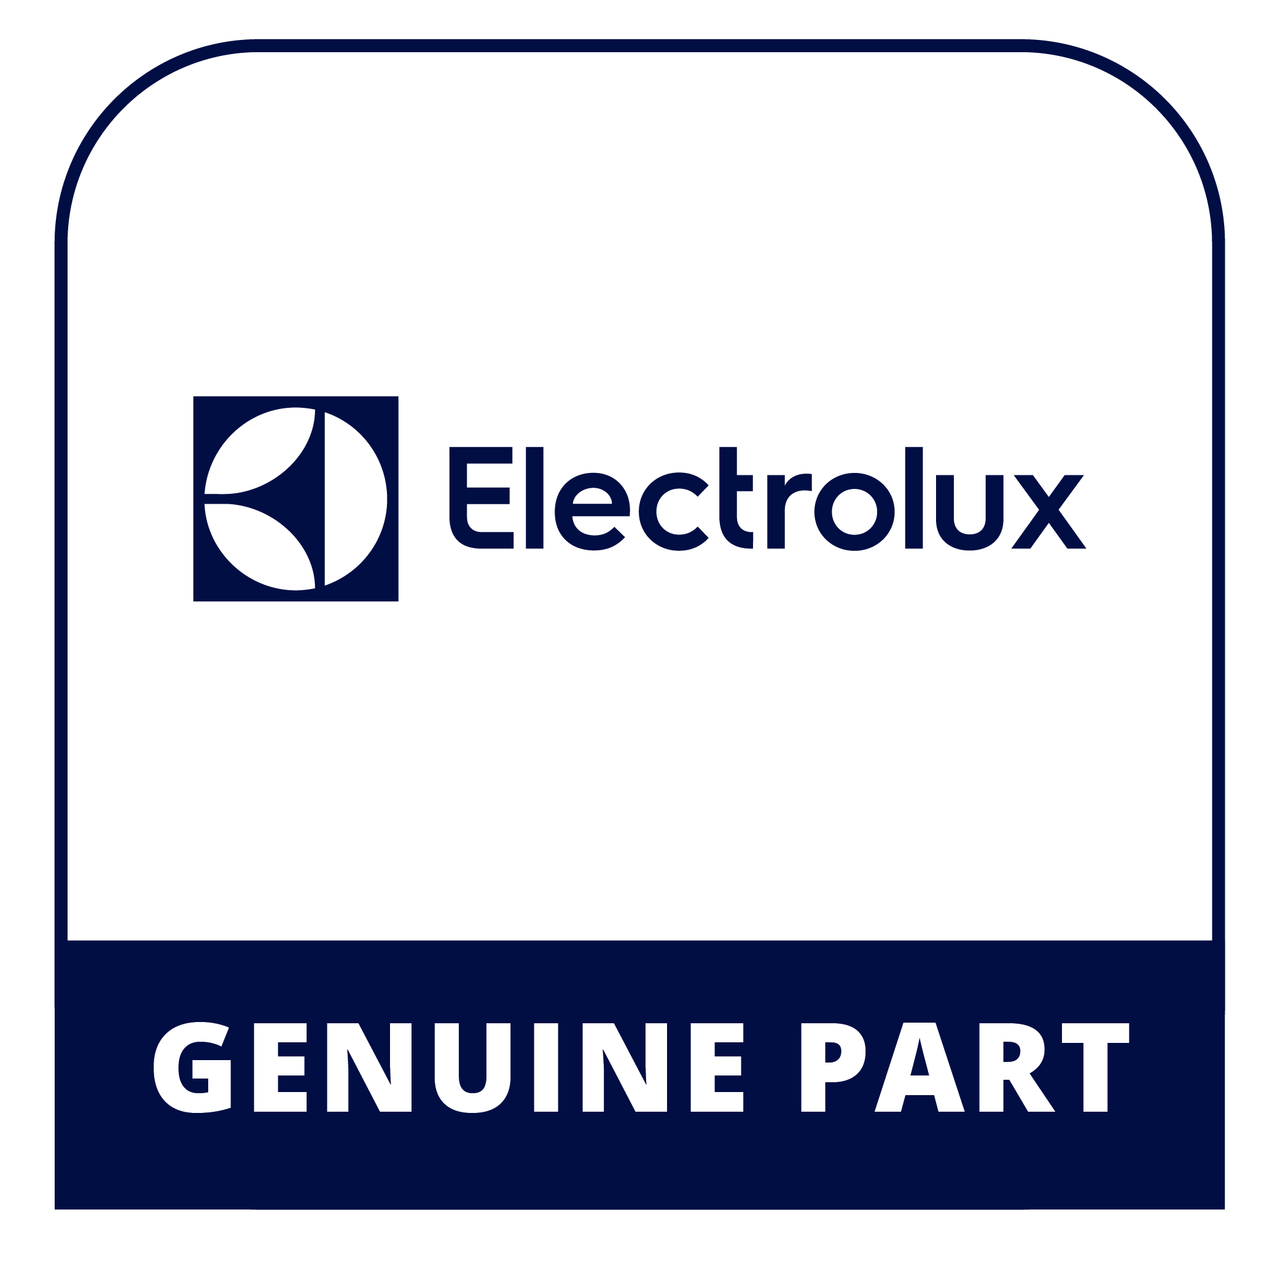 Frigidaire - Electrolux 5304497190 Bracket - Genuine Electrolux Part